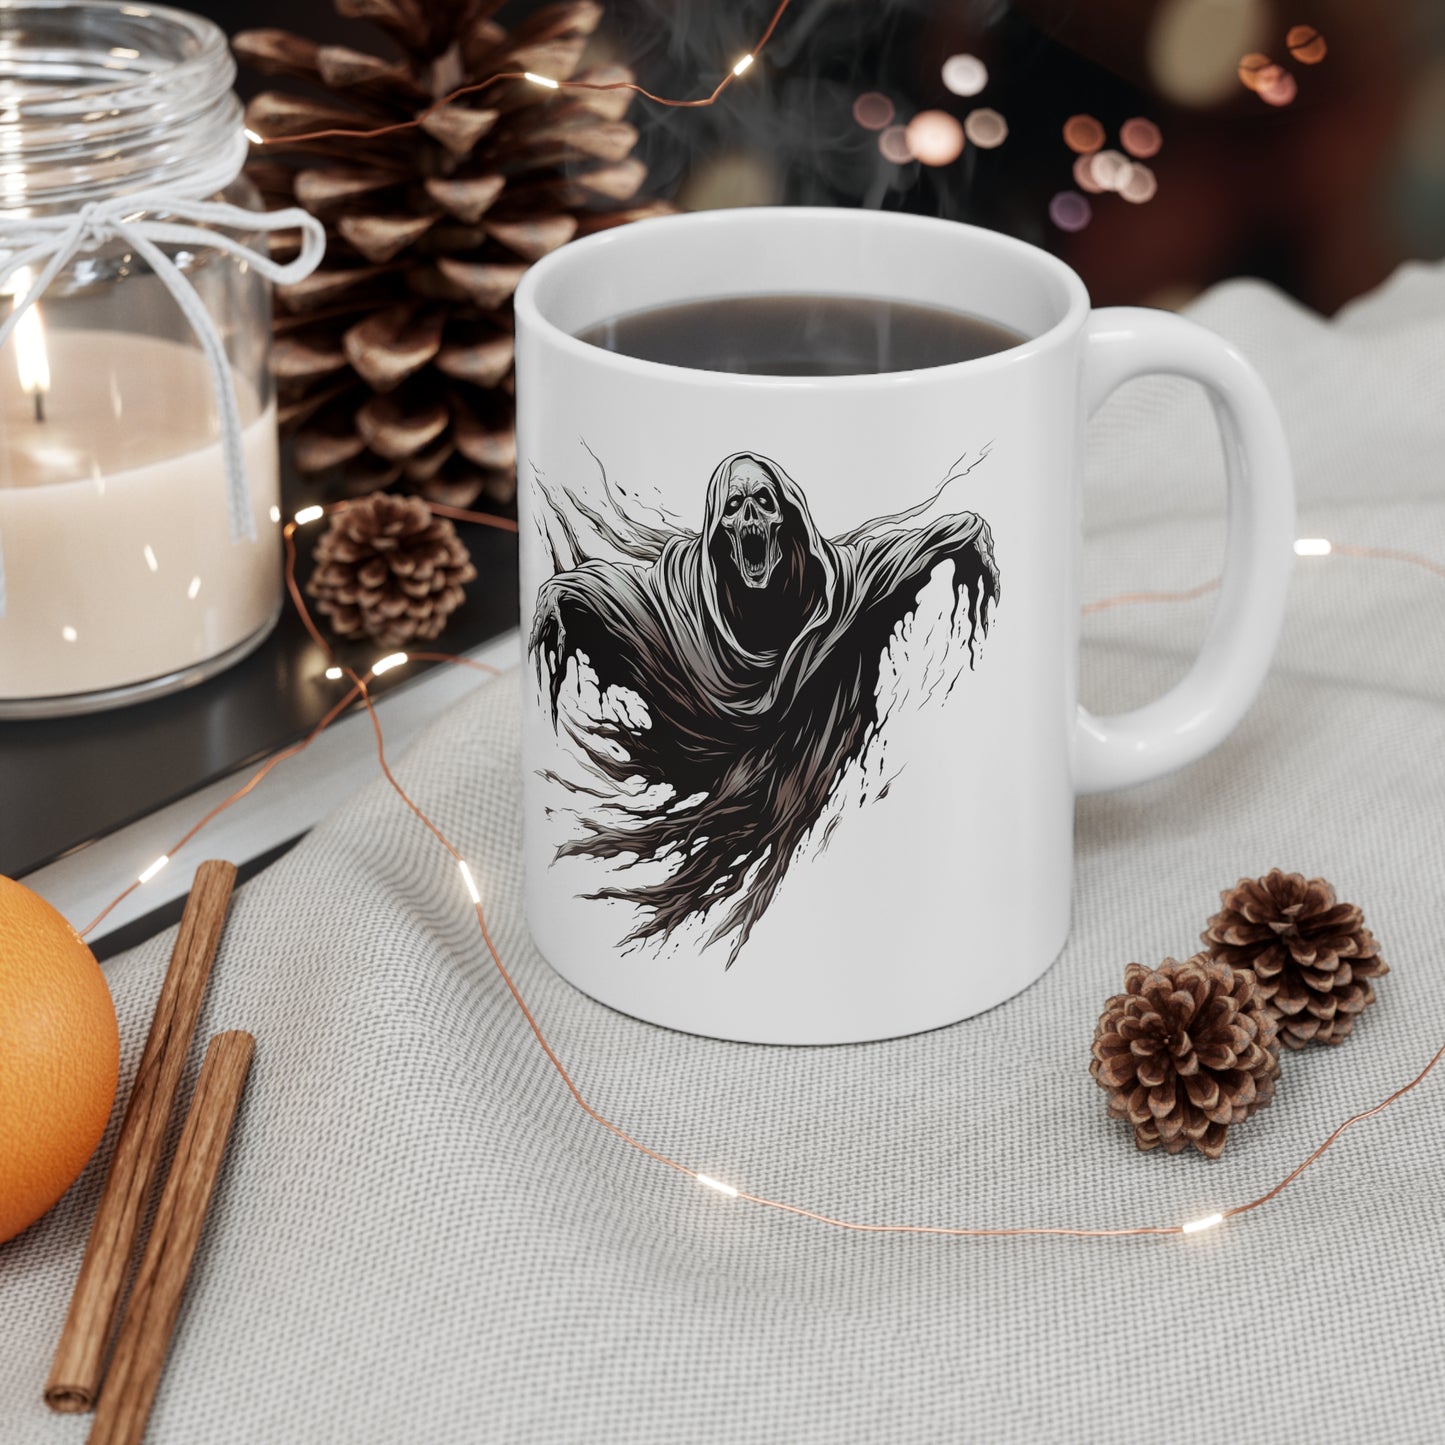 Neduz Dark Lore Banshee Ceramic Mug 11oz: Your Perfect Cup of Dark Magic